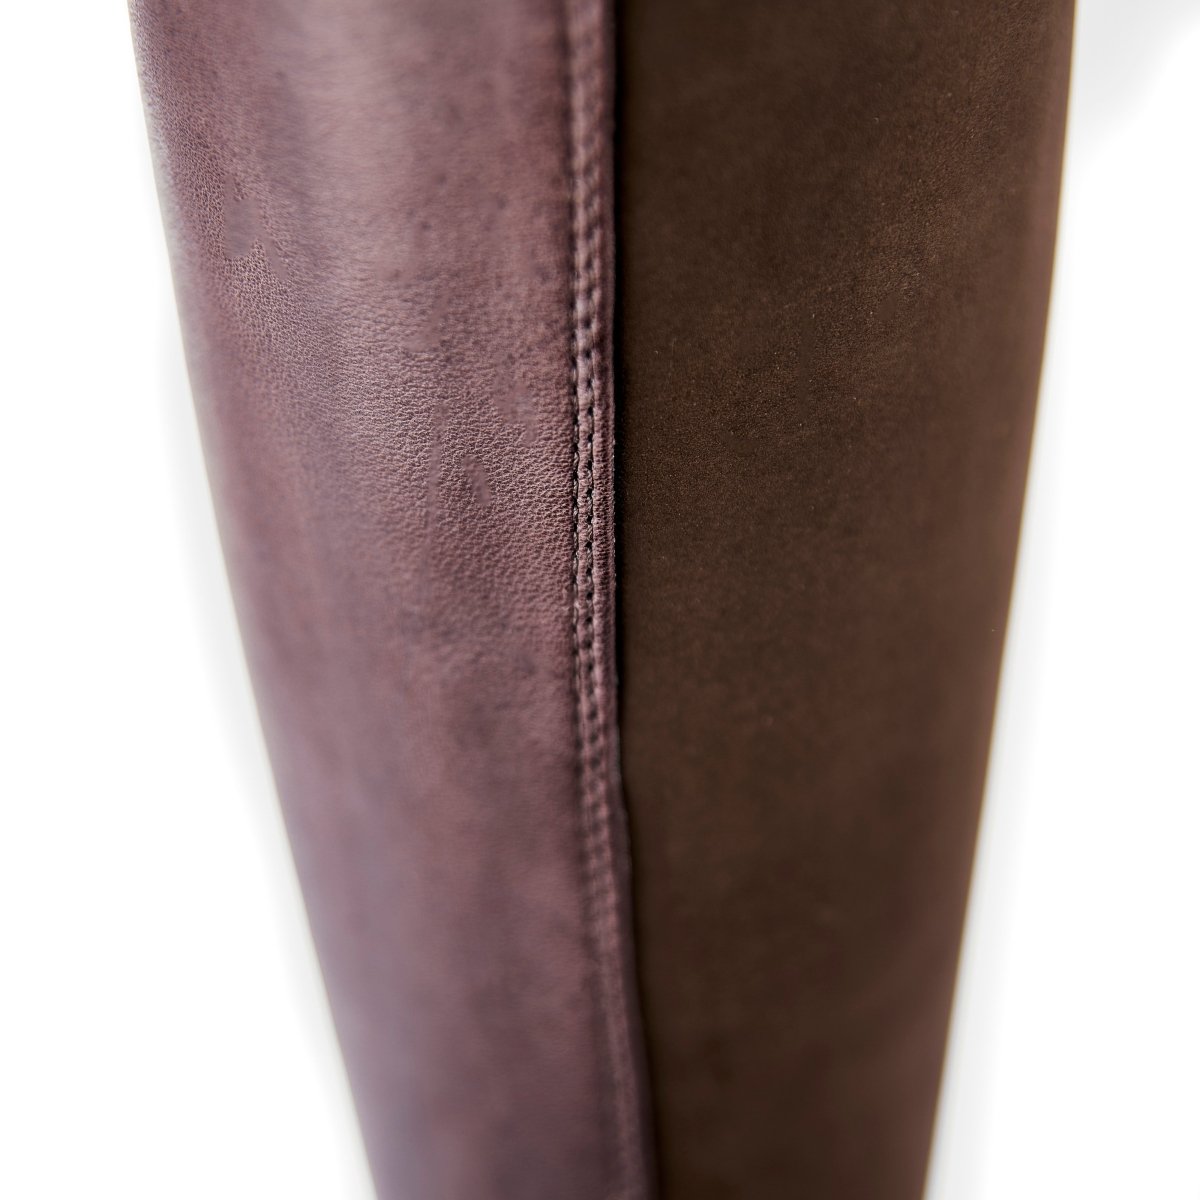 Moretta Lucetta Leather Gaiters - Black - Short L